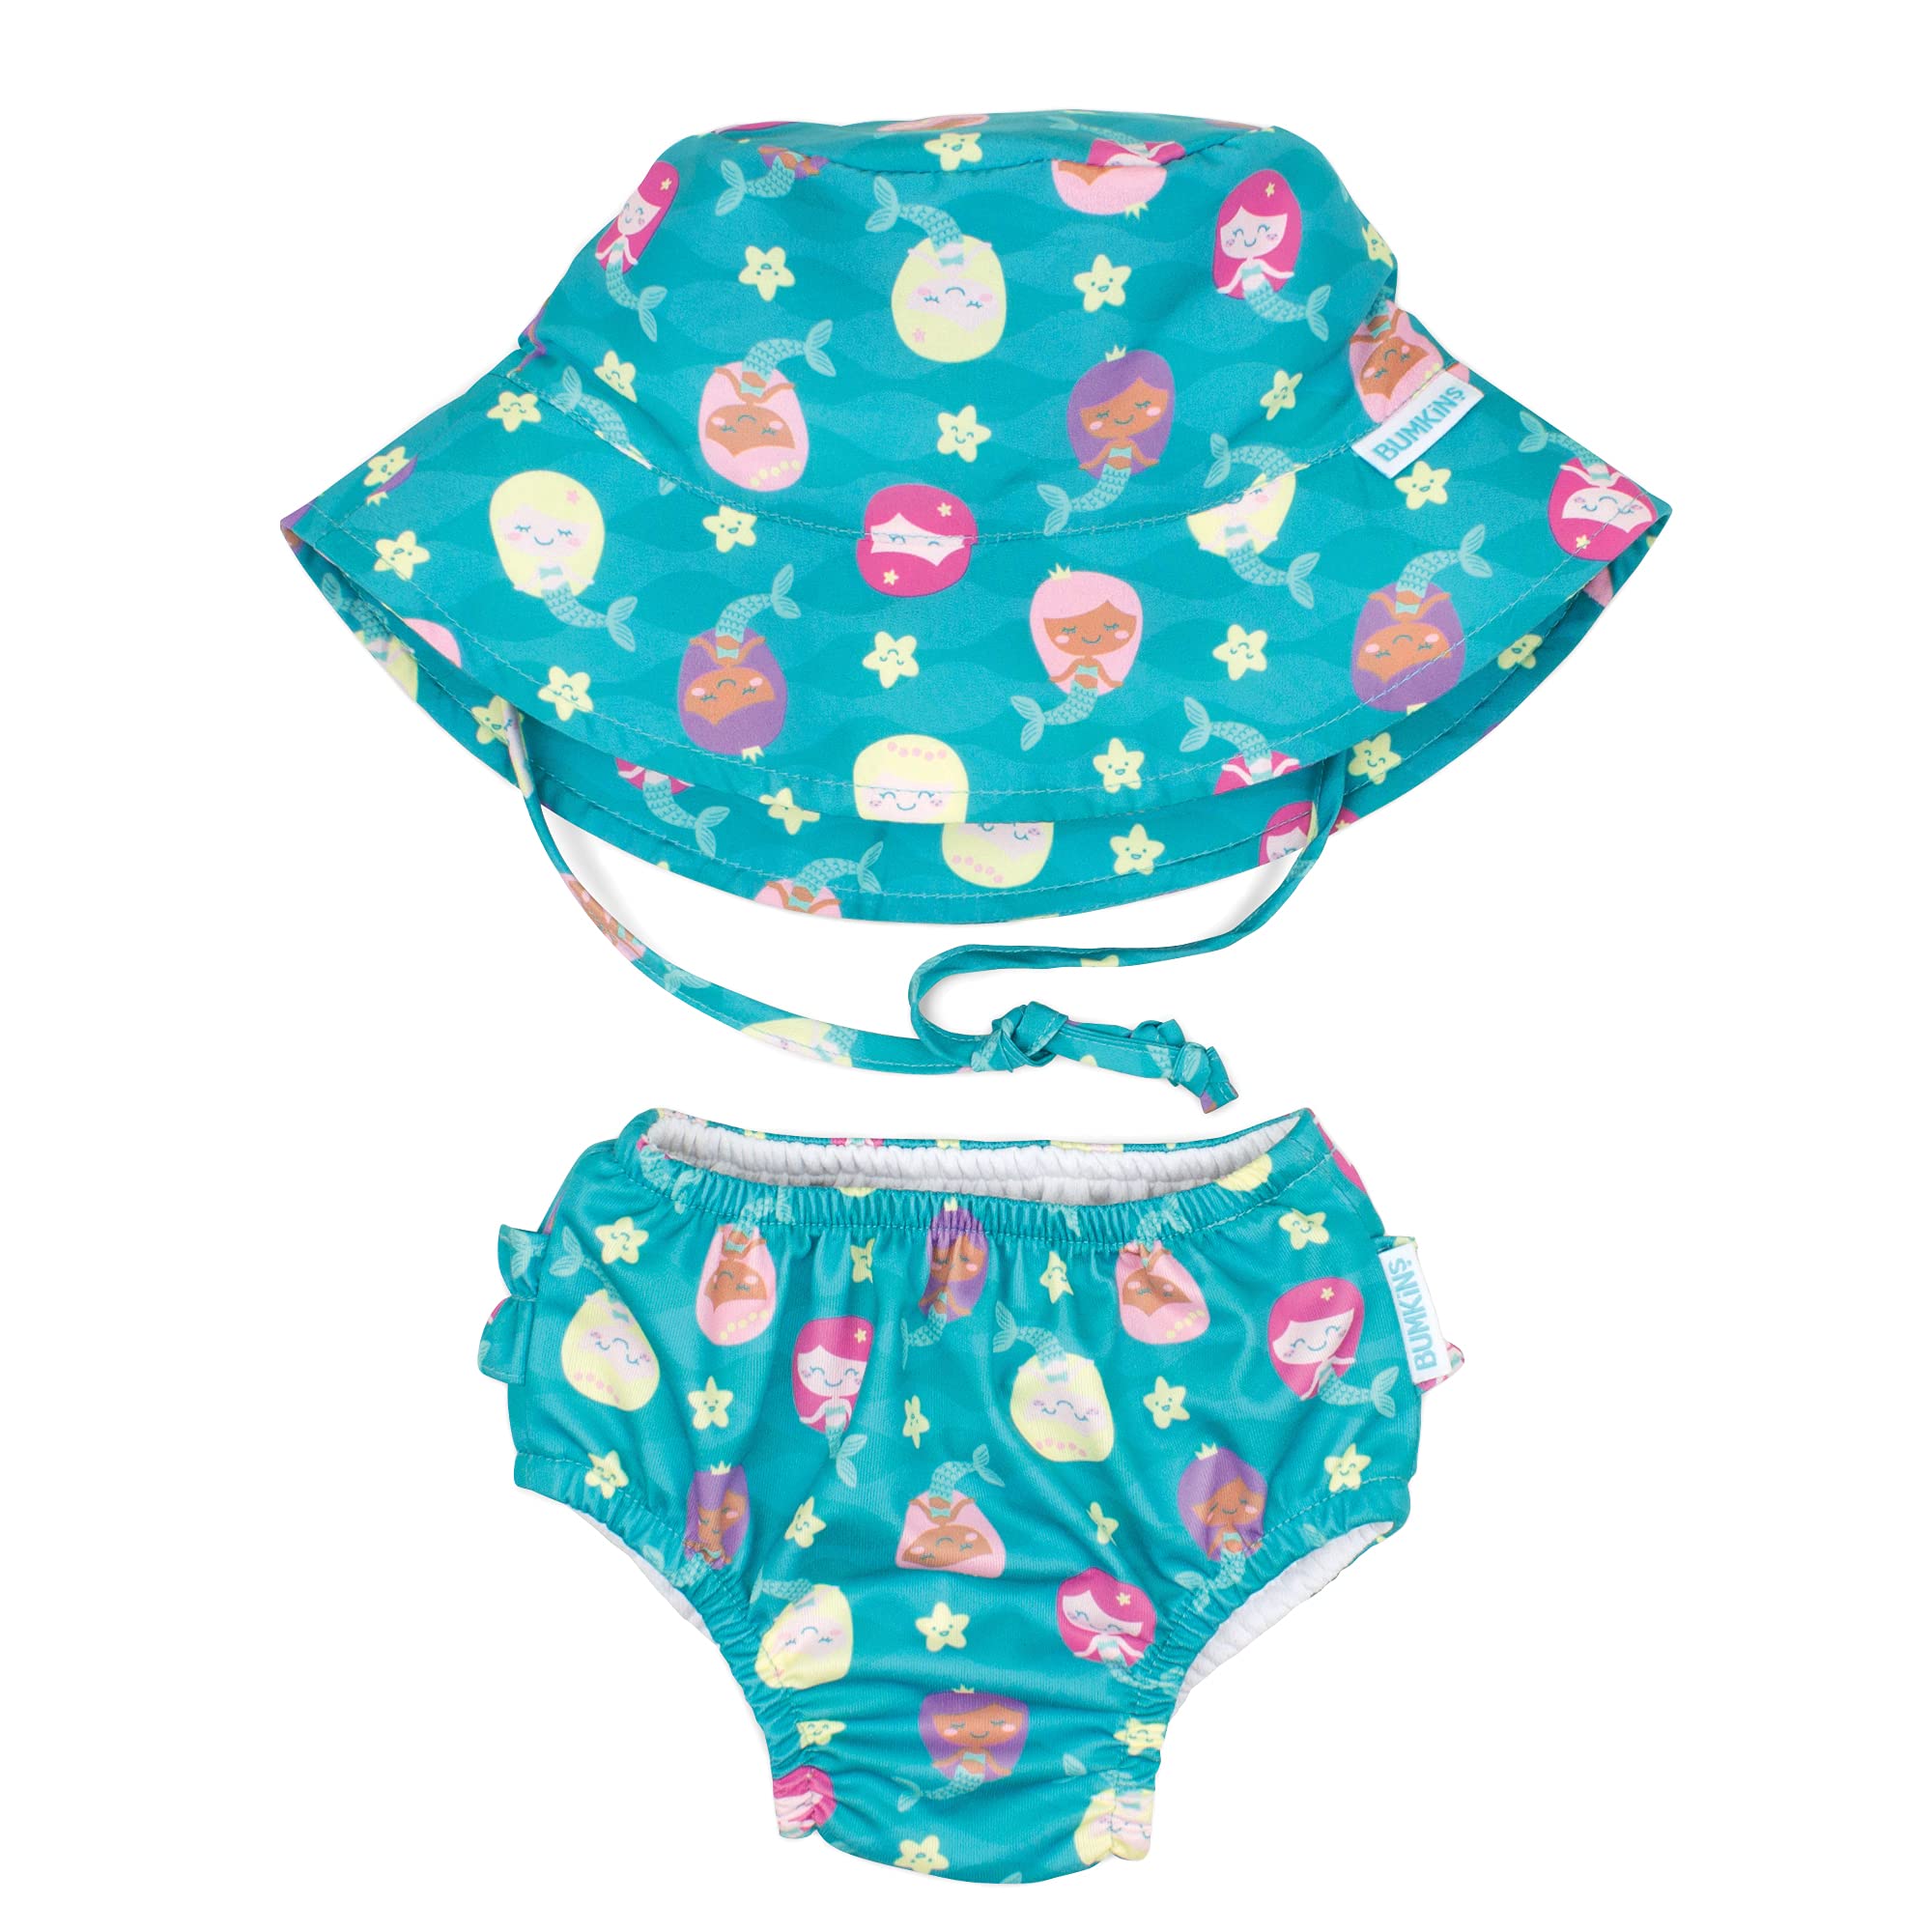 Bumkins Reusable Swim Diaper and Hat, UPF +50, Mermaid, 18 Months